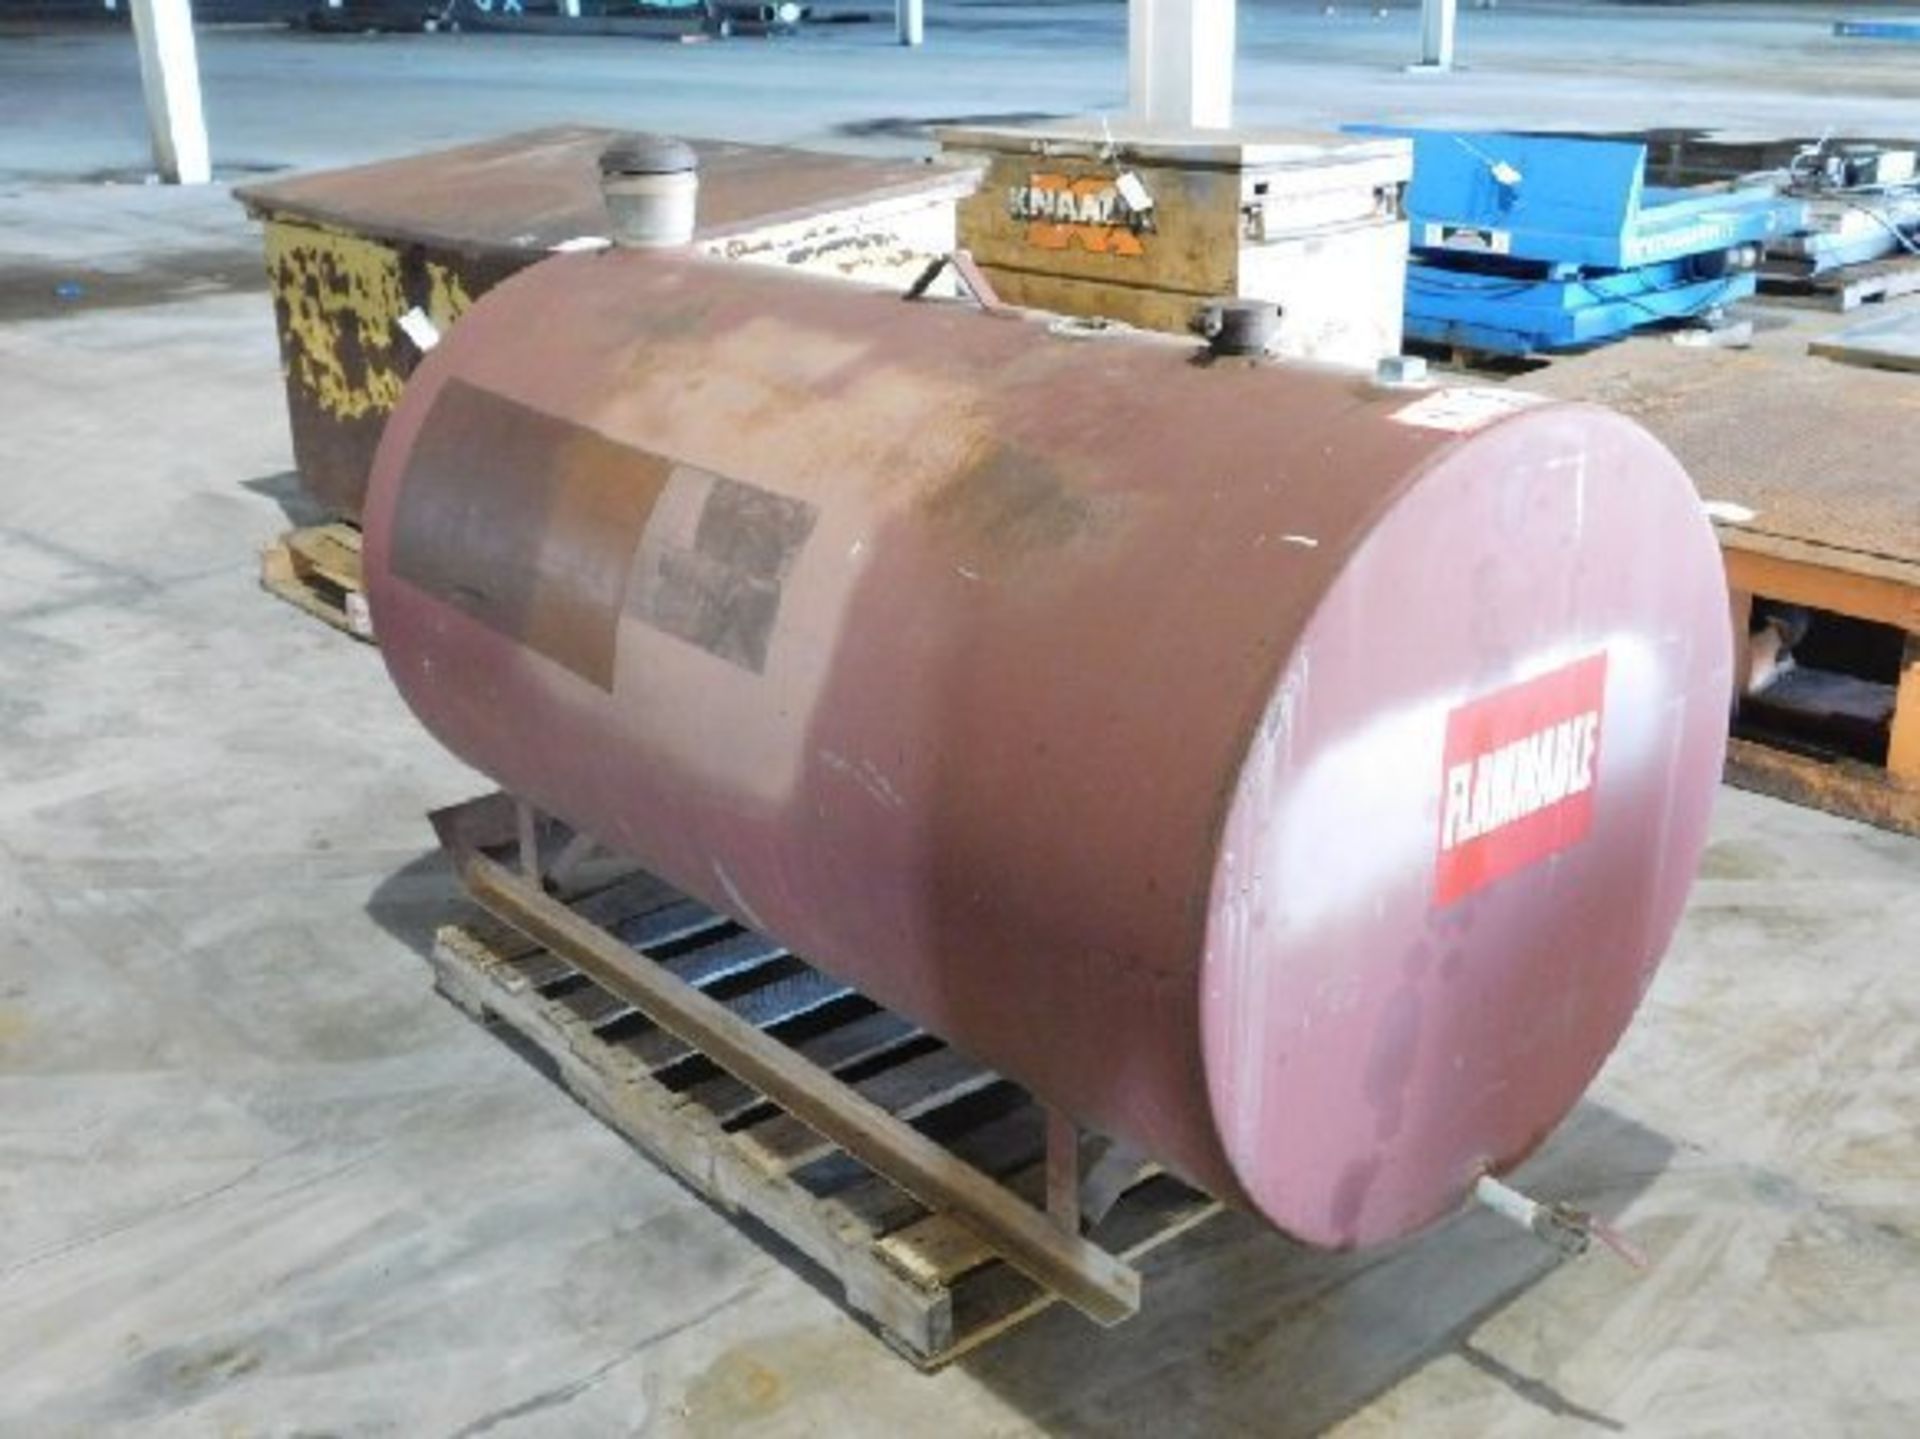 Bendel Corp. 250 gal. Steel Tank w/vent - $20.00 Load Fee